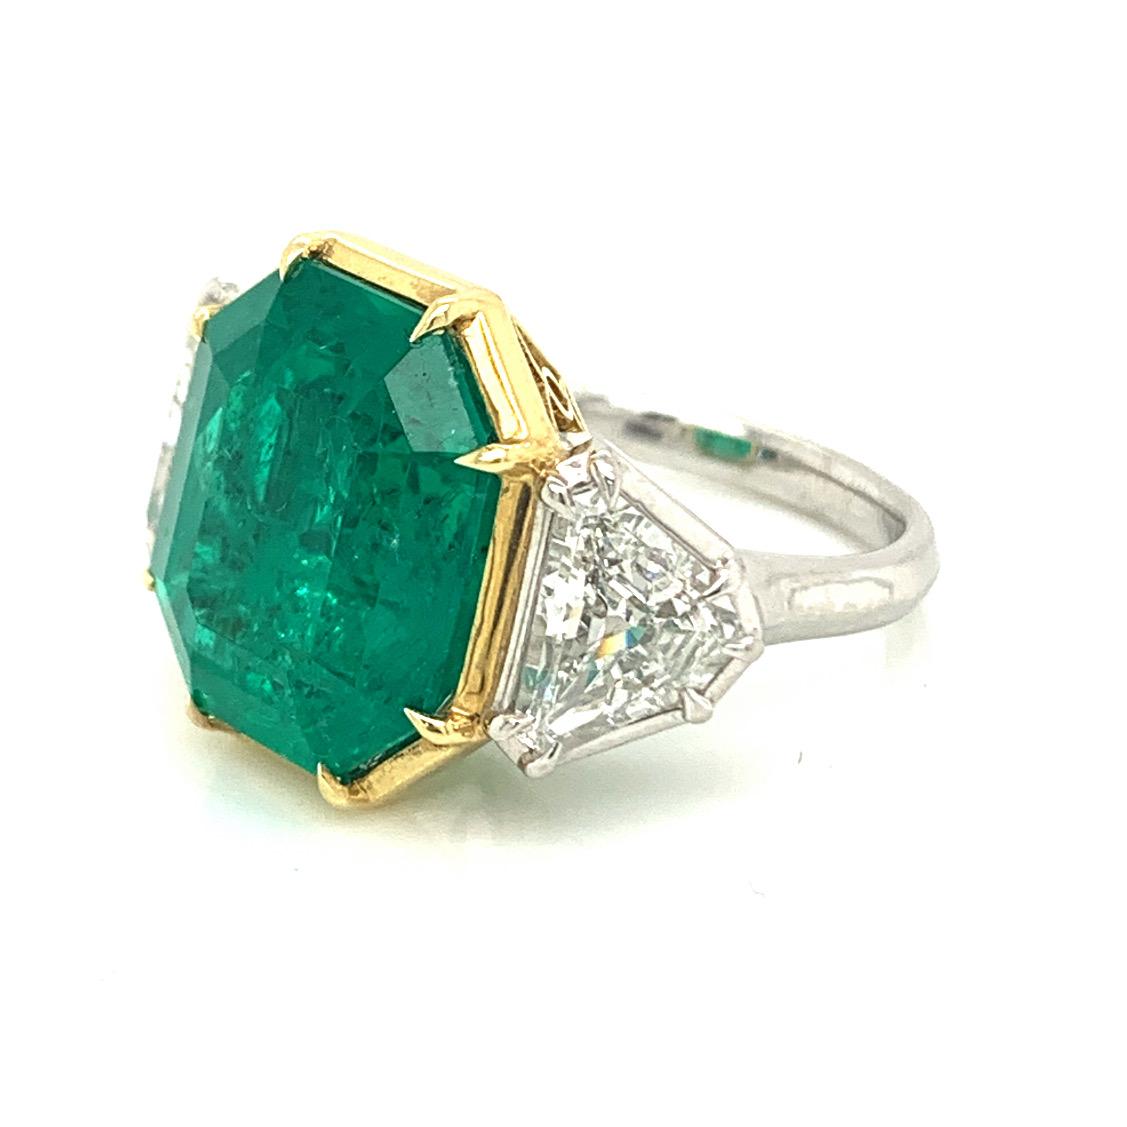 10 carat colombian emerald